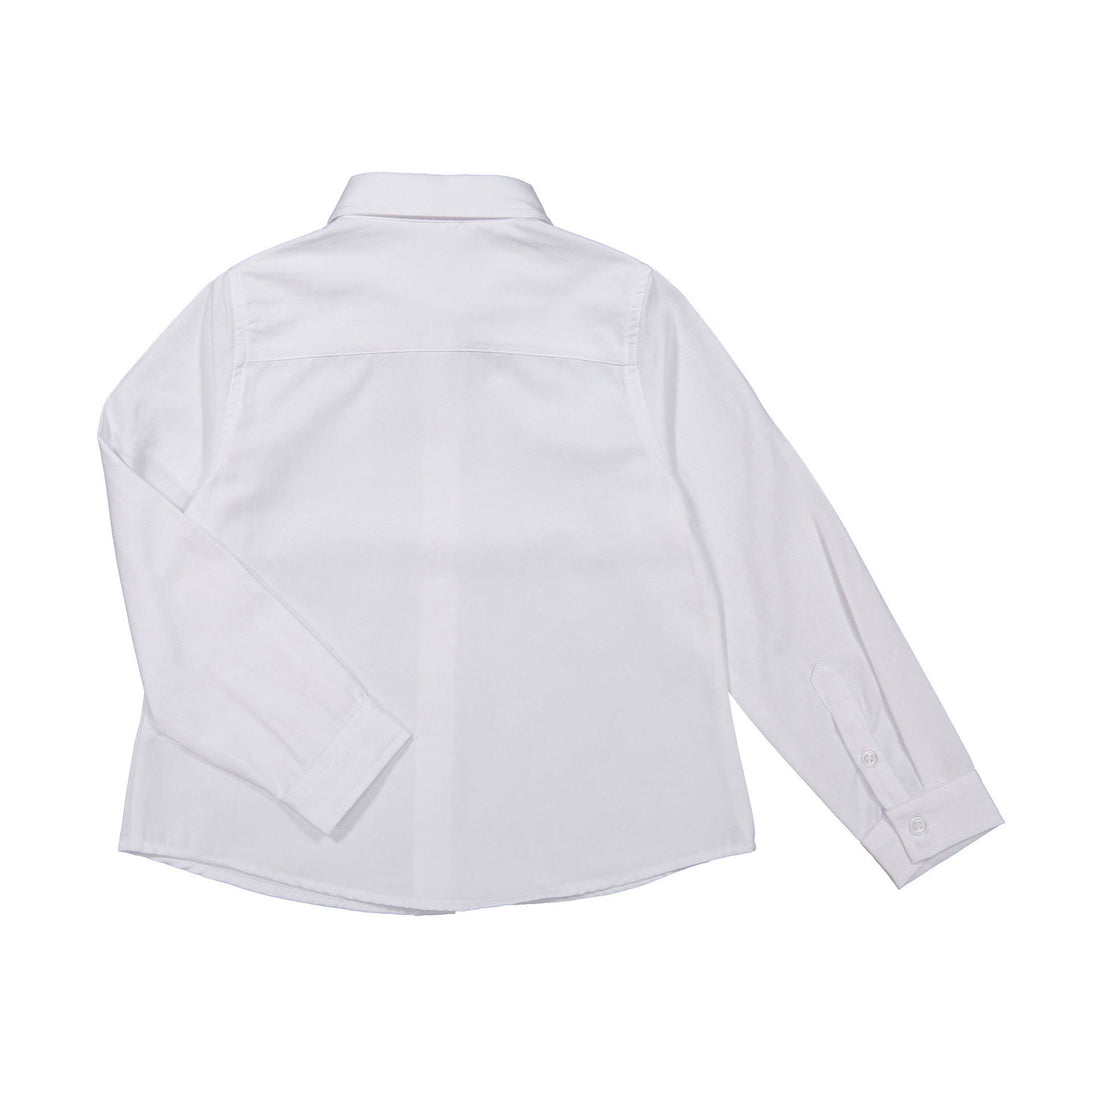 Boys and Arrows White Long Sleeve Collar Shirt